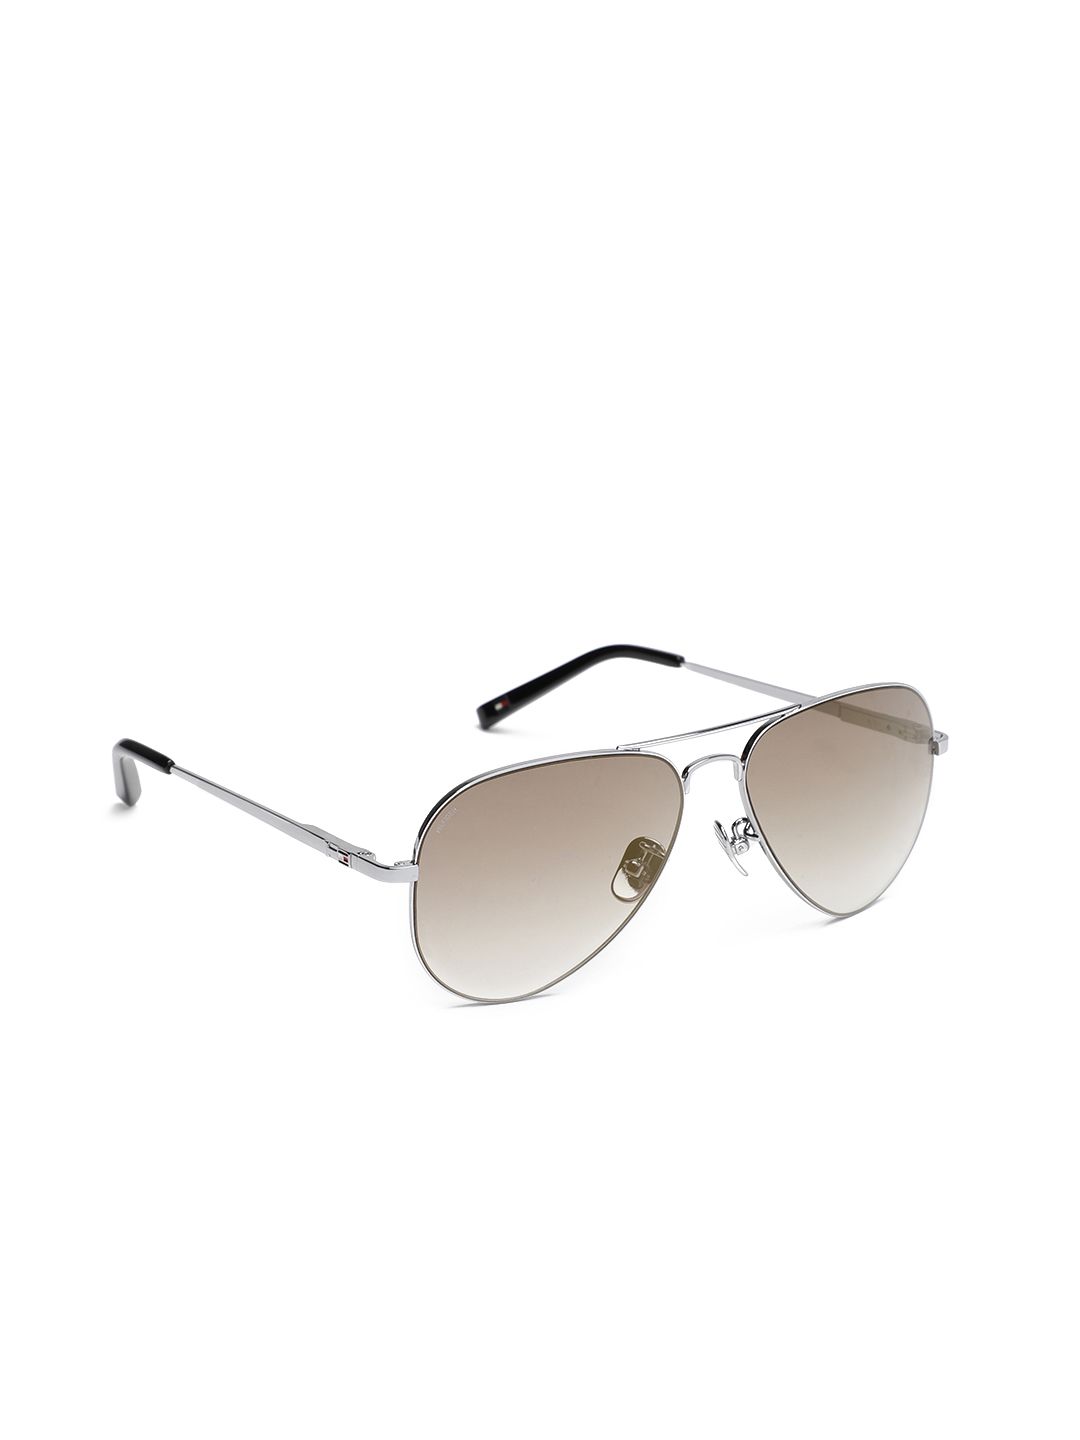 Tommy Hilfiger Unisex Aviator Sunglasses 836 C3 Price in India